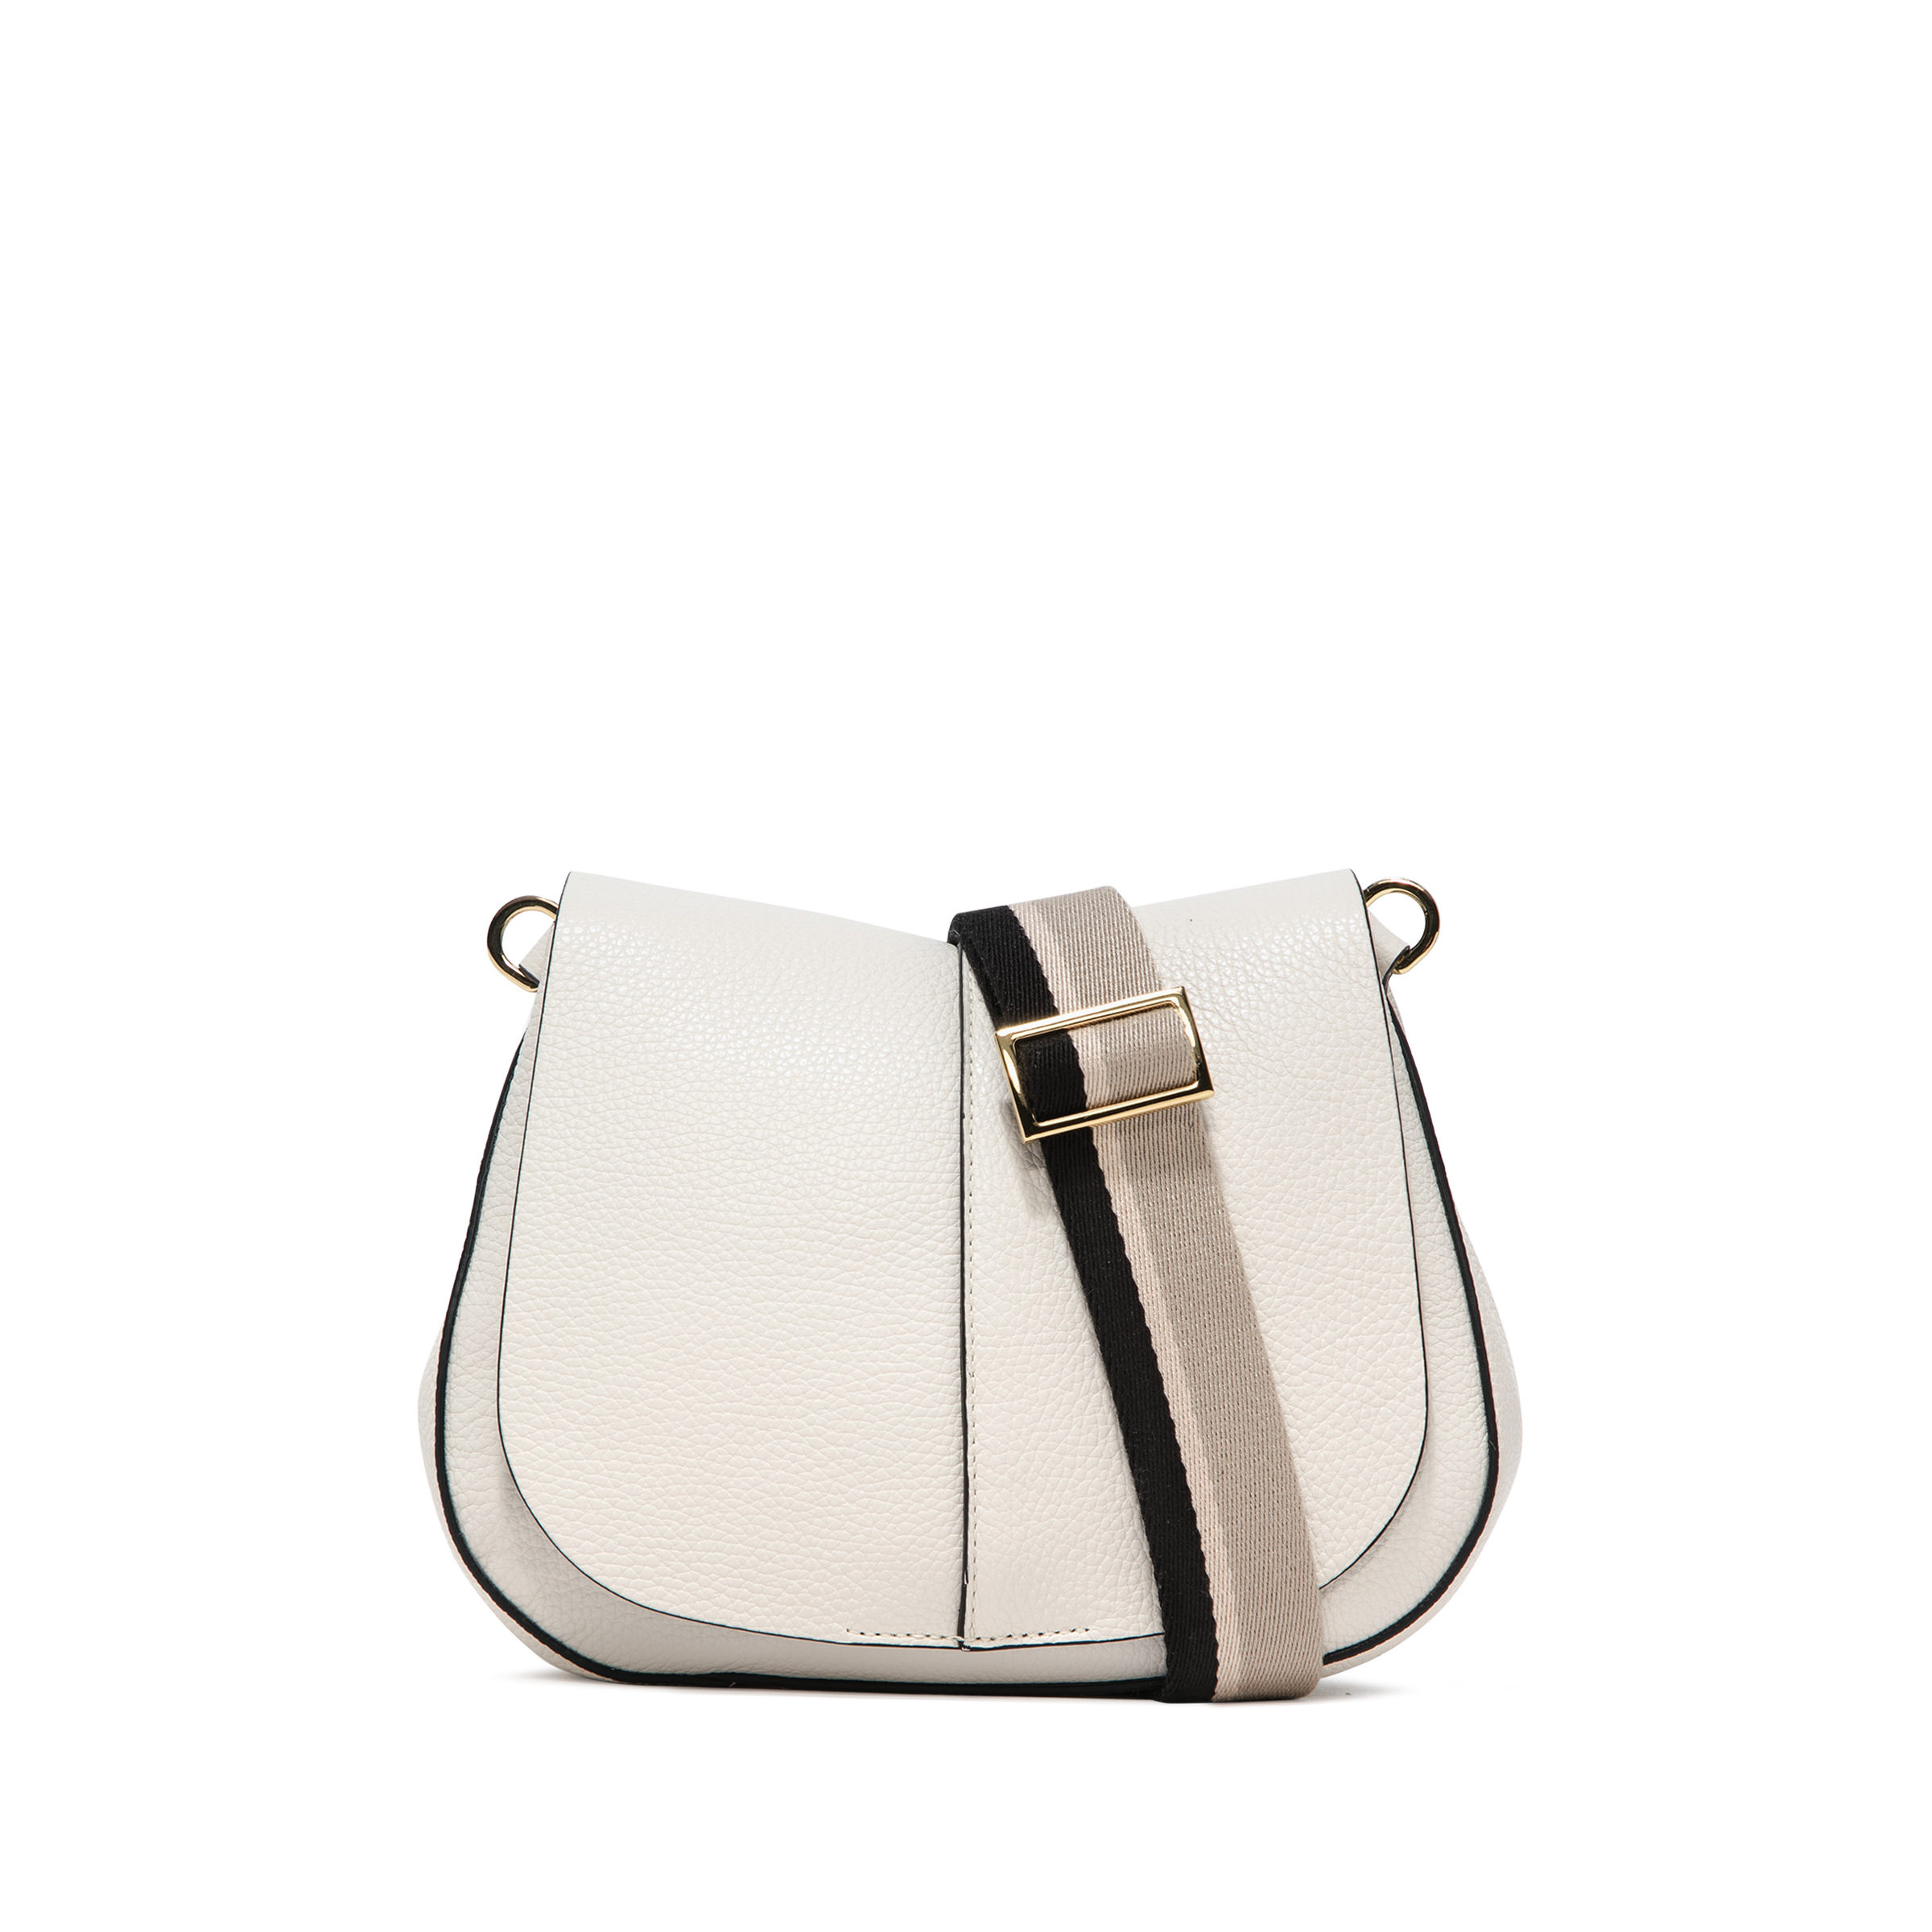 Gianni Chiarini - Helena Round bag in leather, White, large image number 1